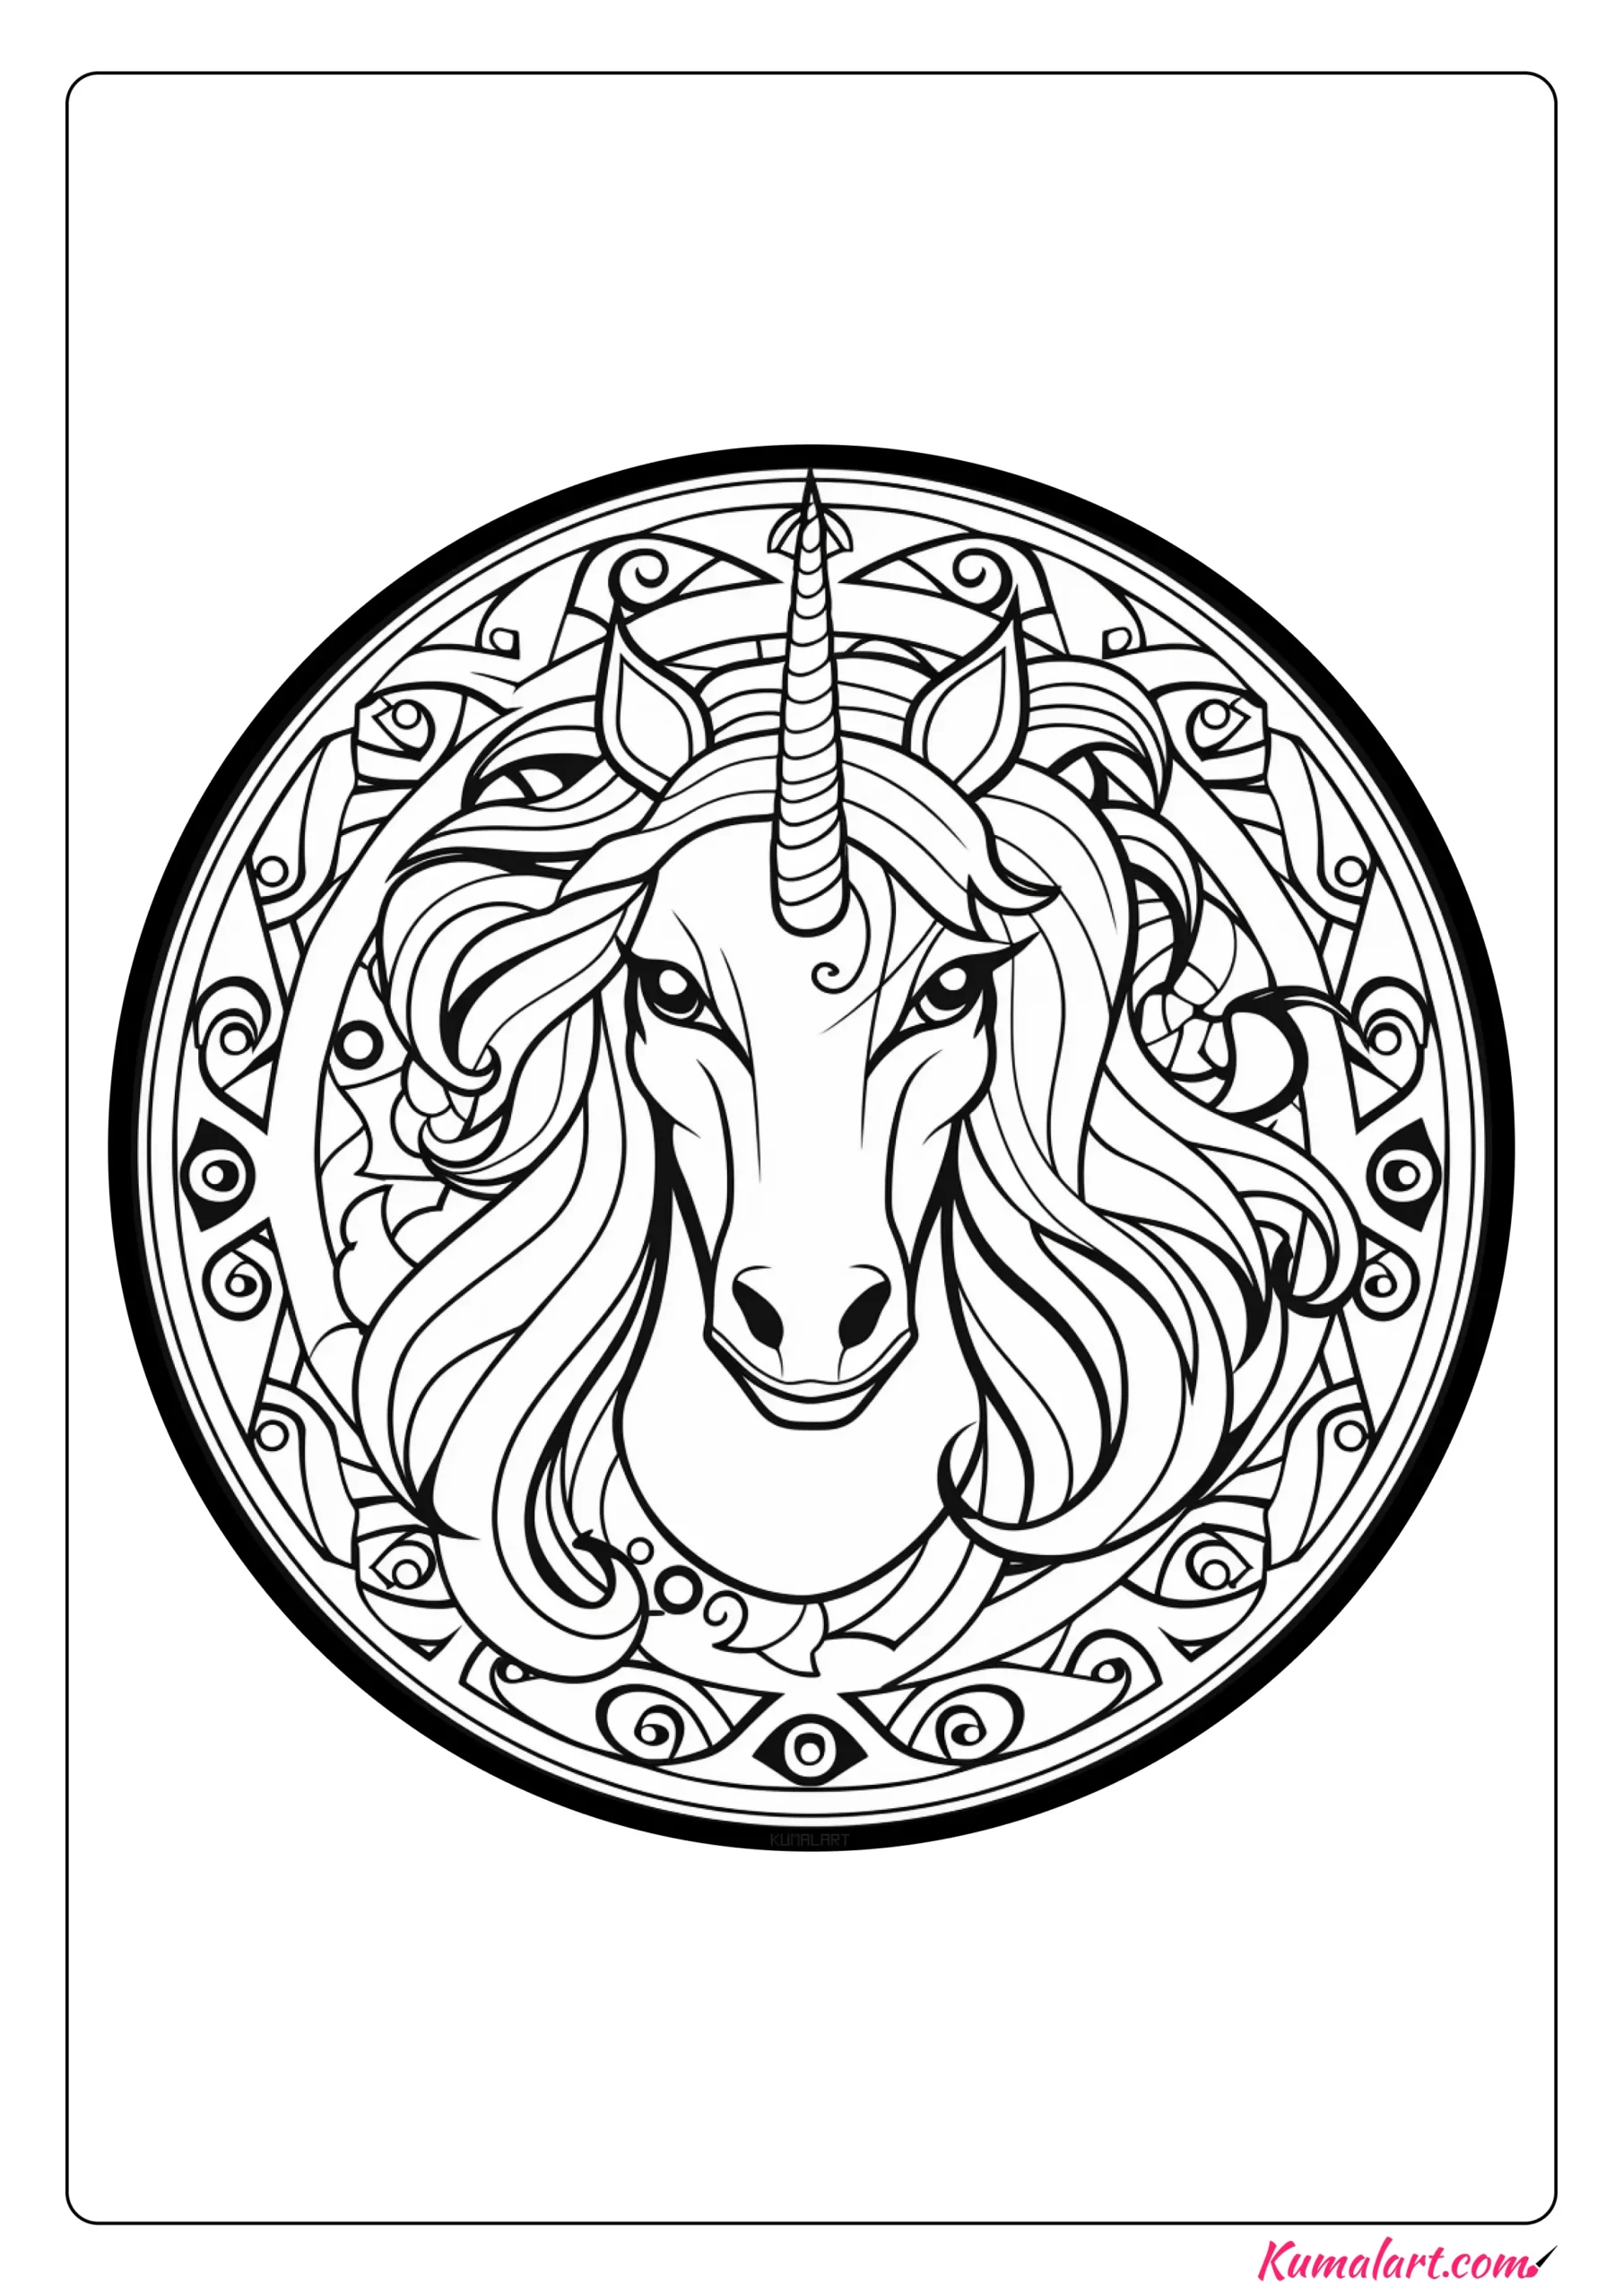 Alani the Unicorn Mandala Coloring Page